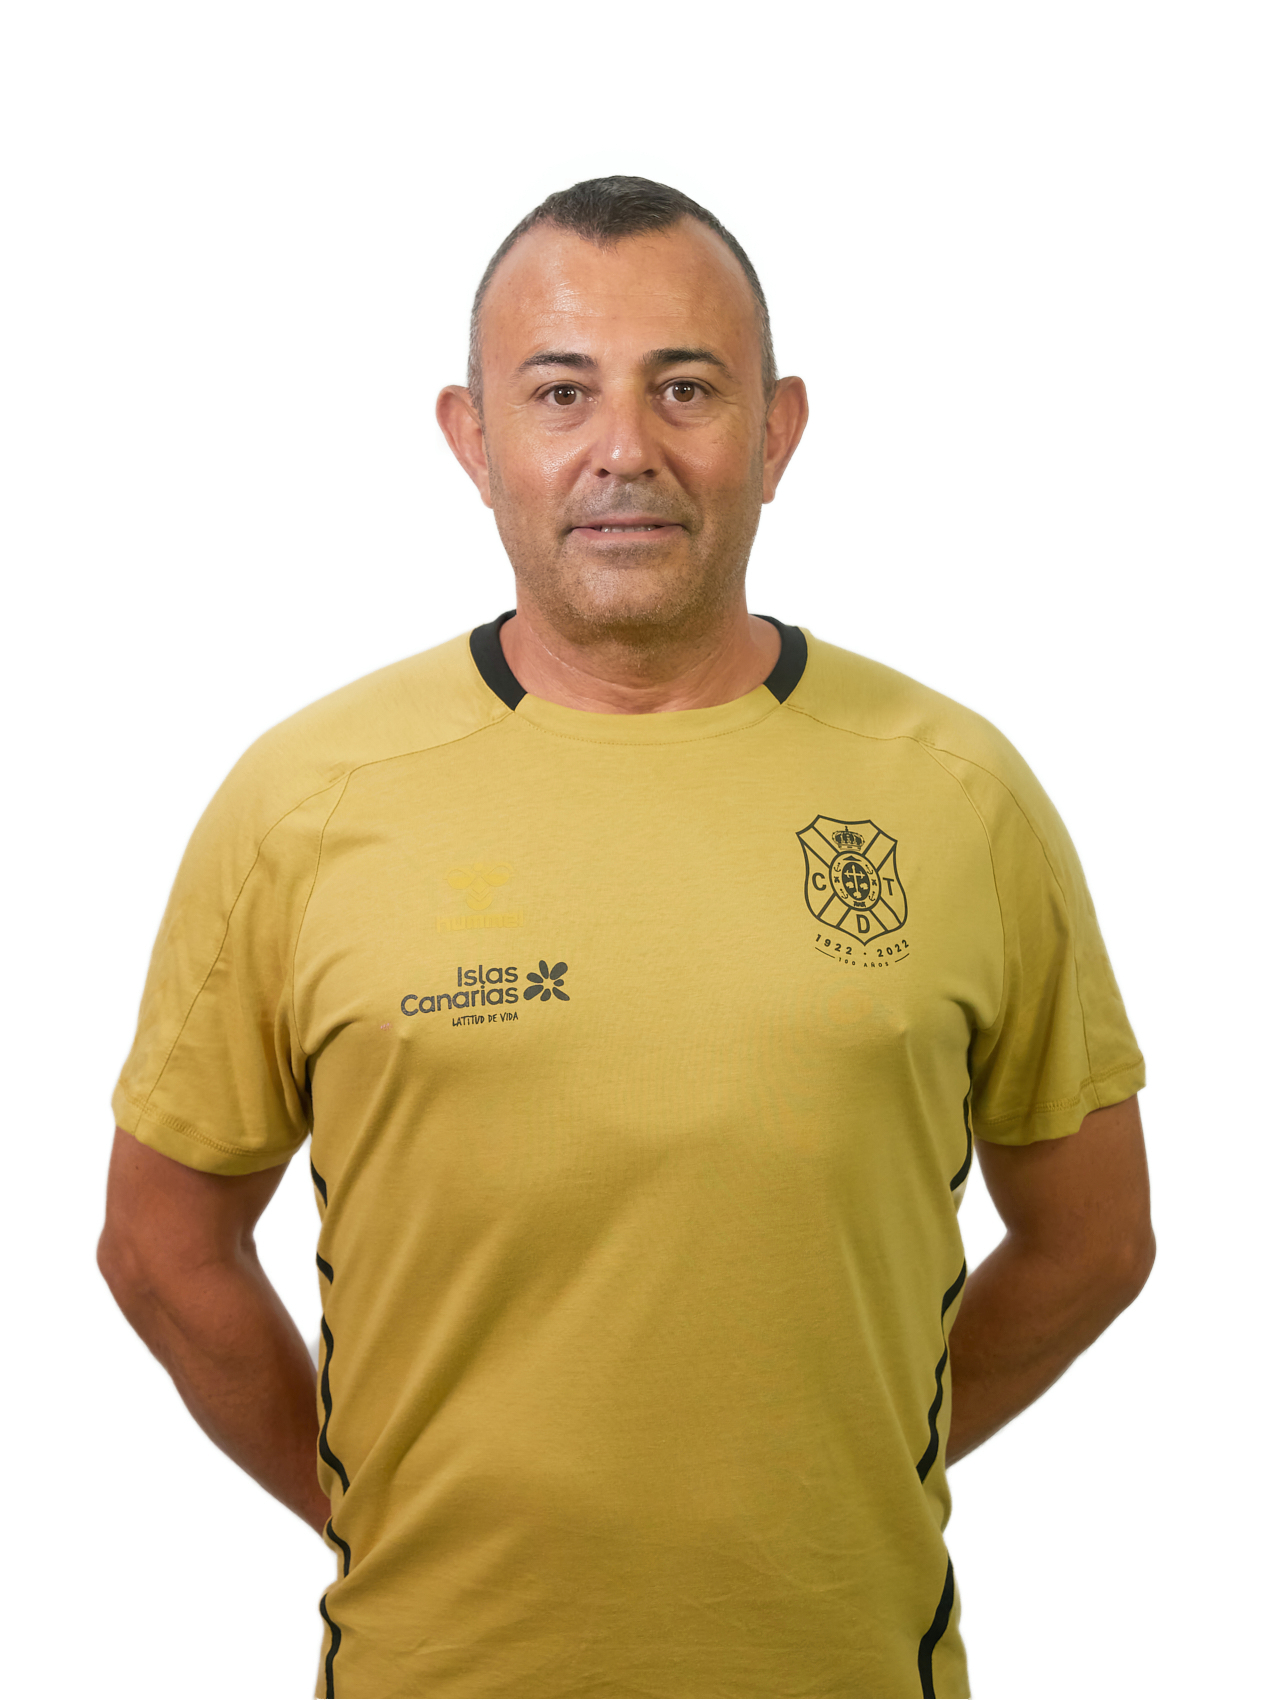 José Cristóbal Rodríguez Sanchidrián